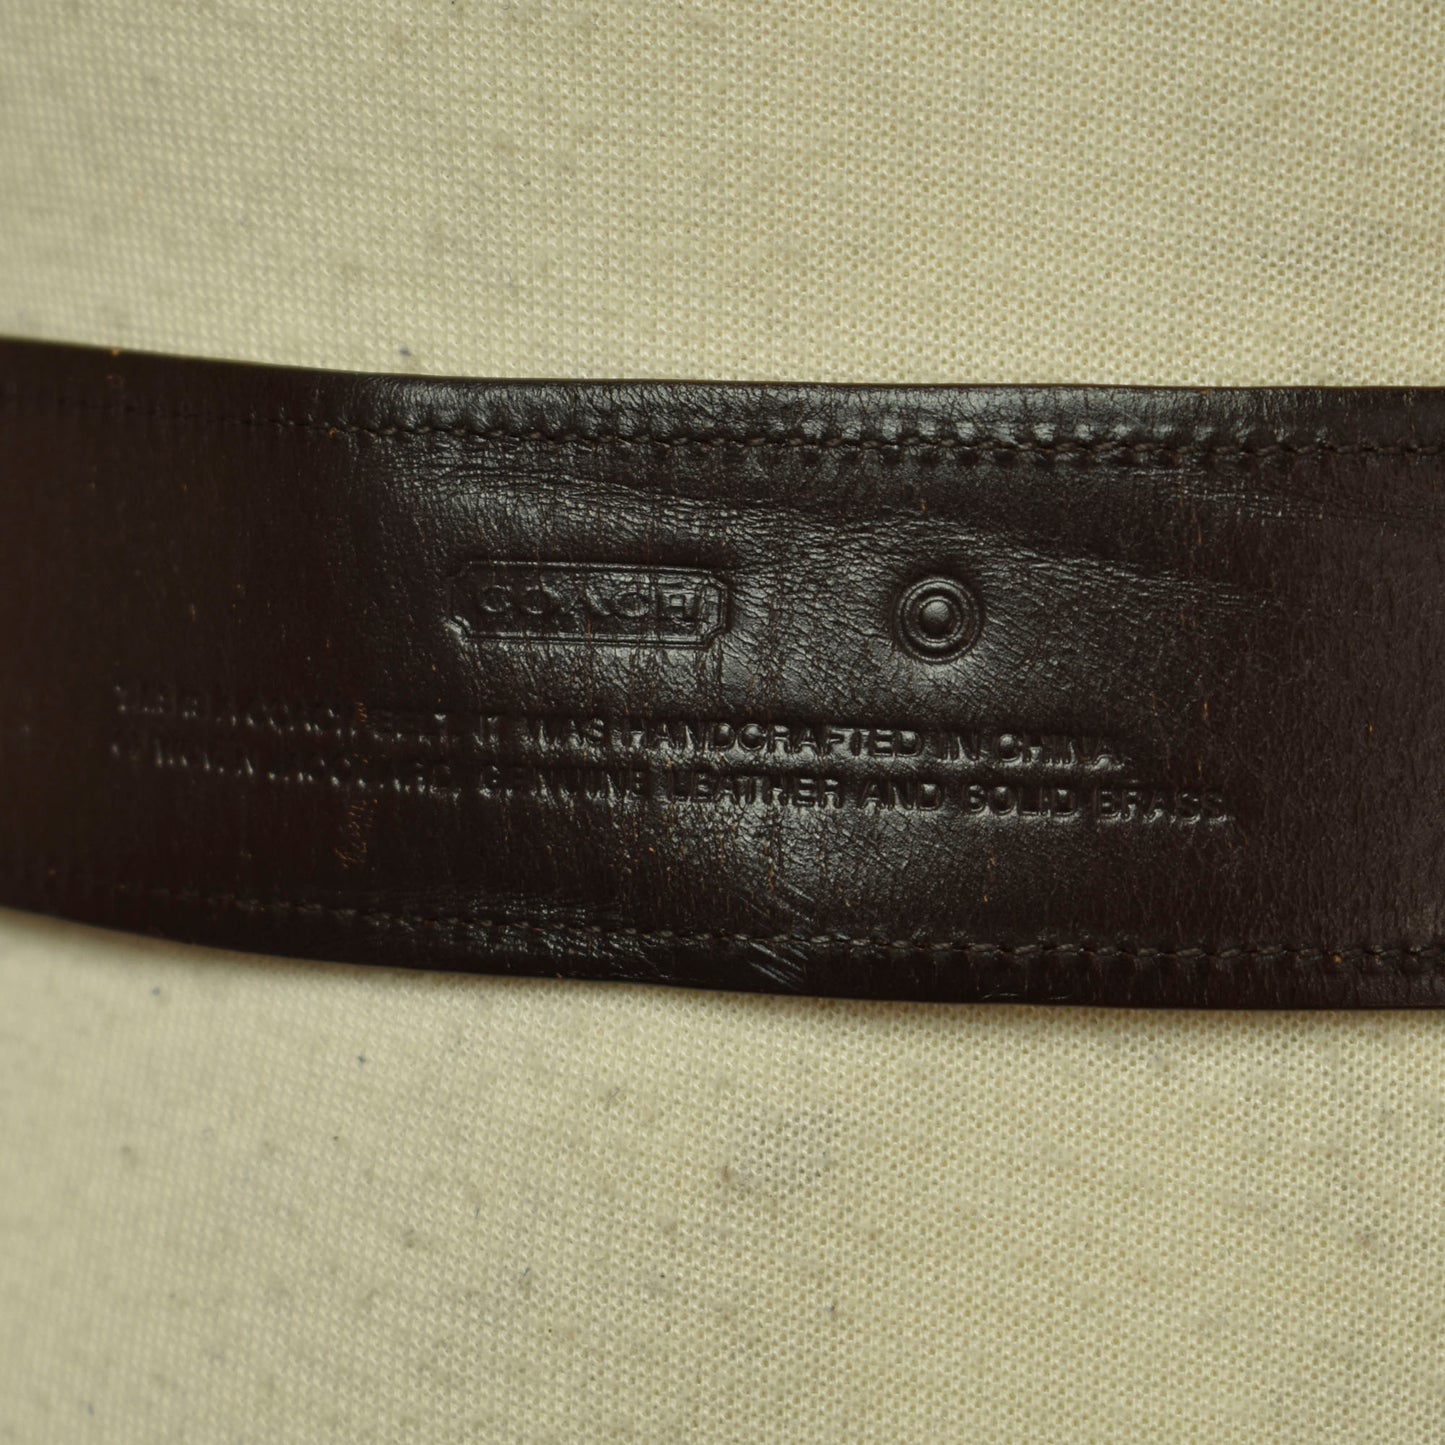 Authentic Signature Coach Woman’s Leather Belt